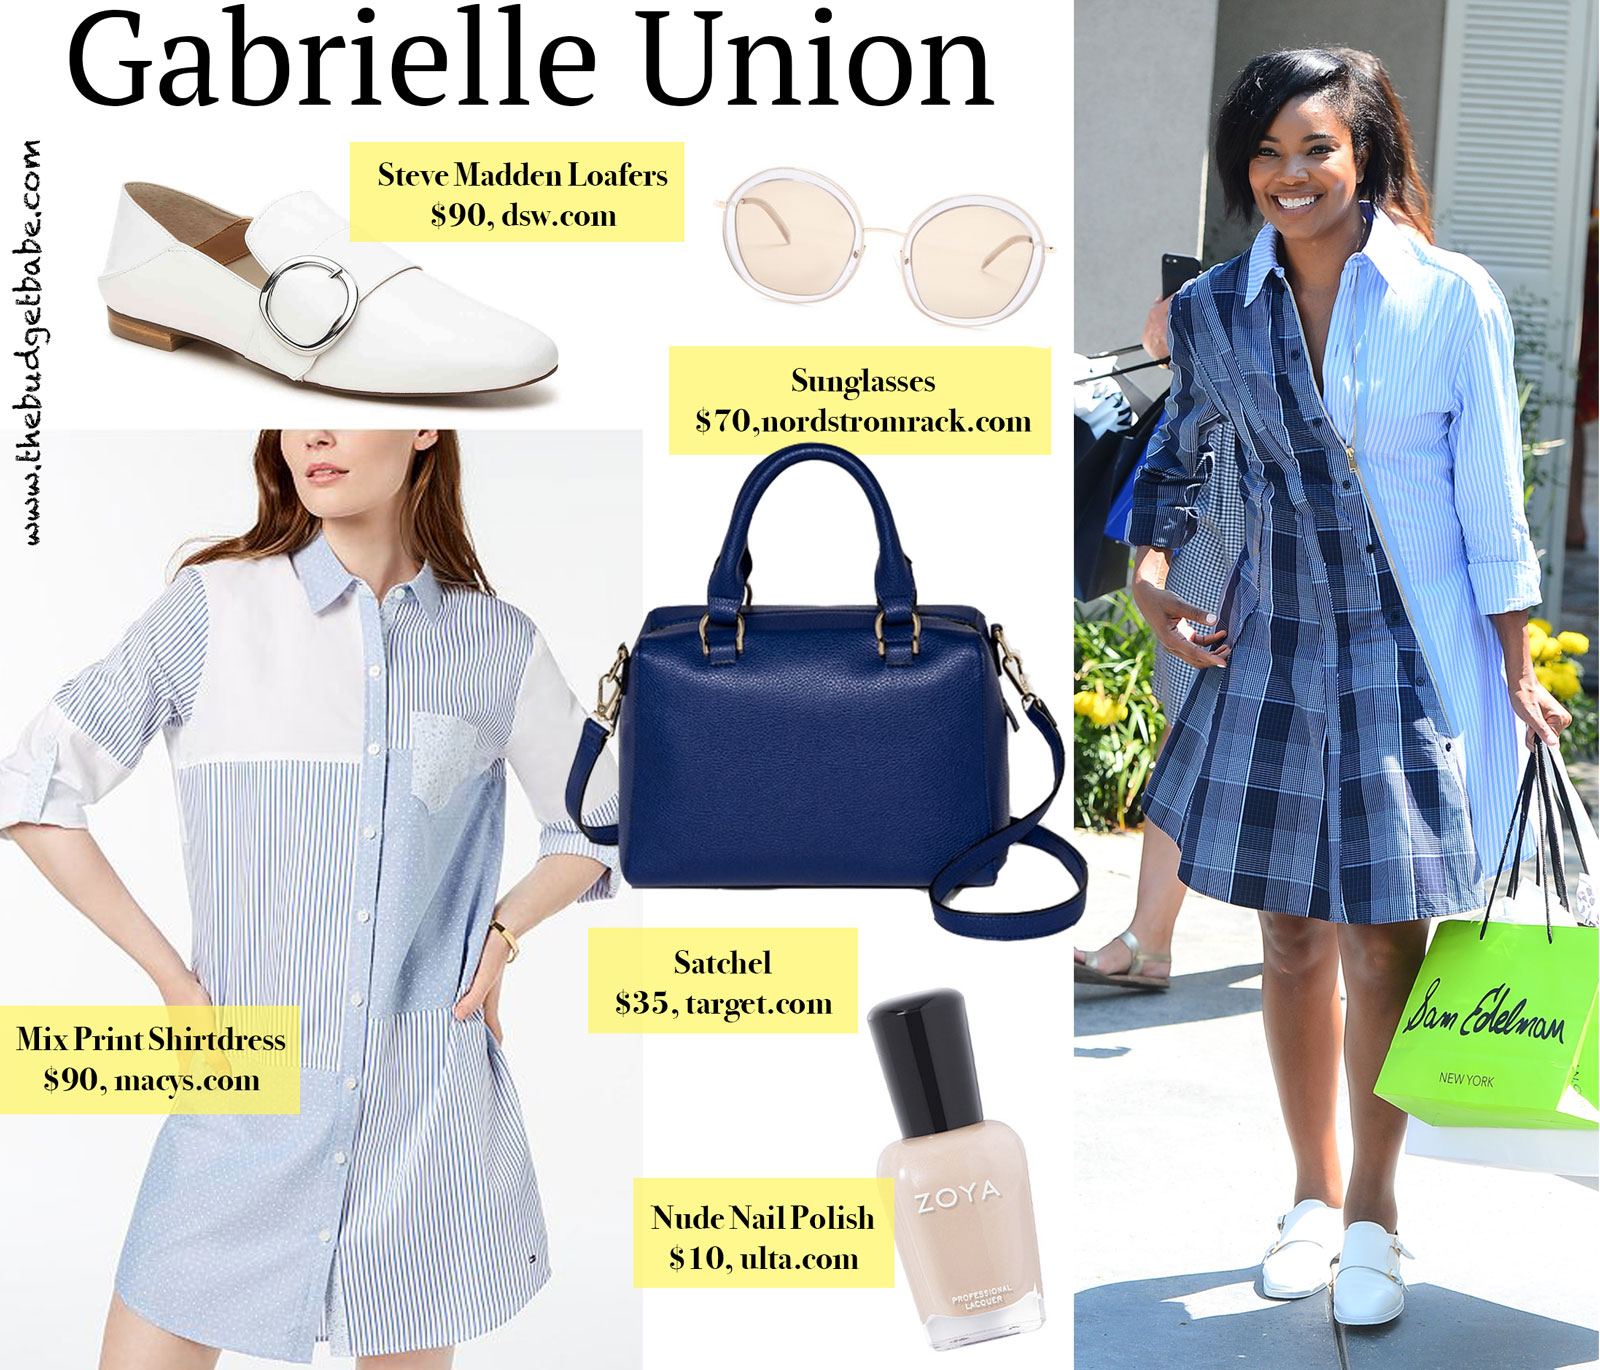 Gabrielle Union Stella McCartney Mix Media Dress Look for Less